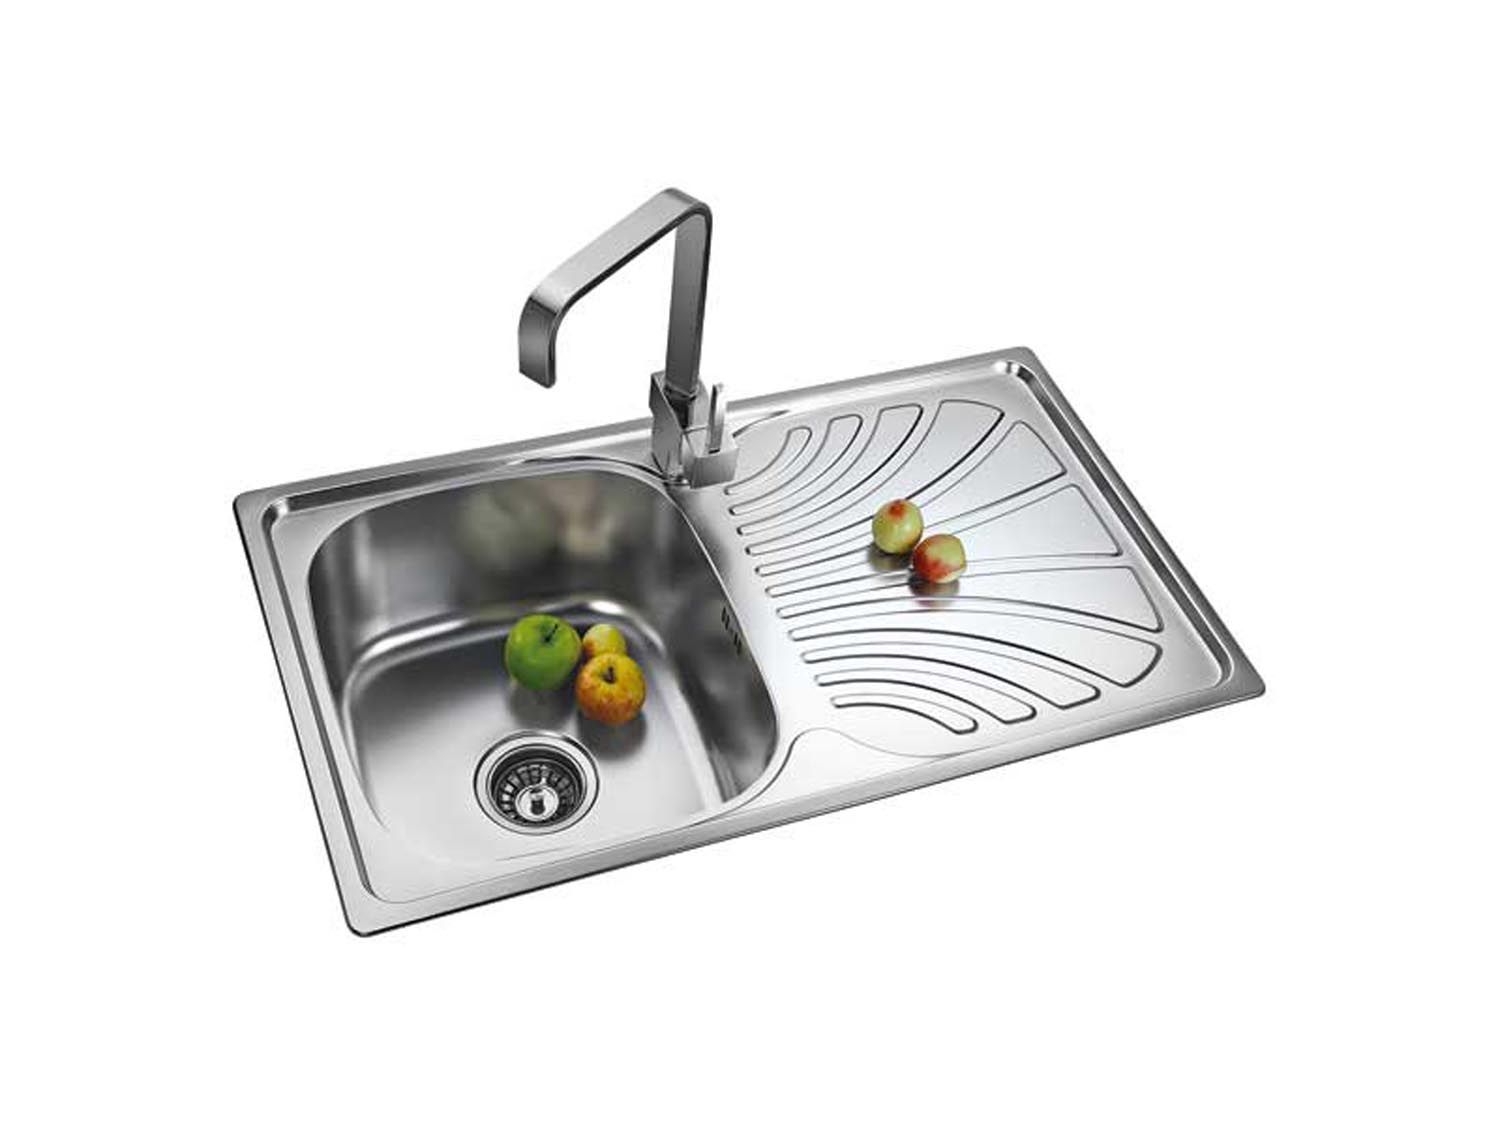 fantasy kitchen sink site tvtropes.org